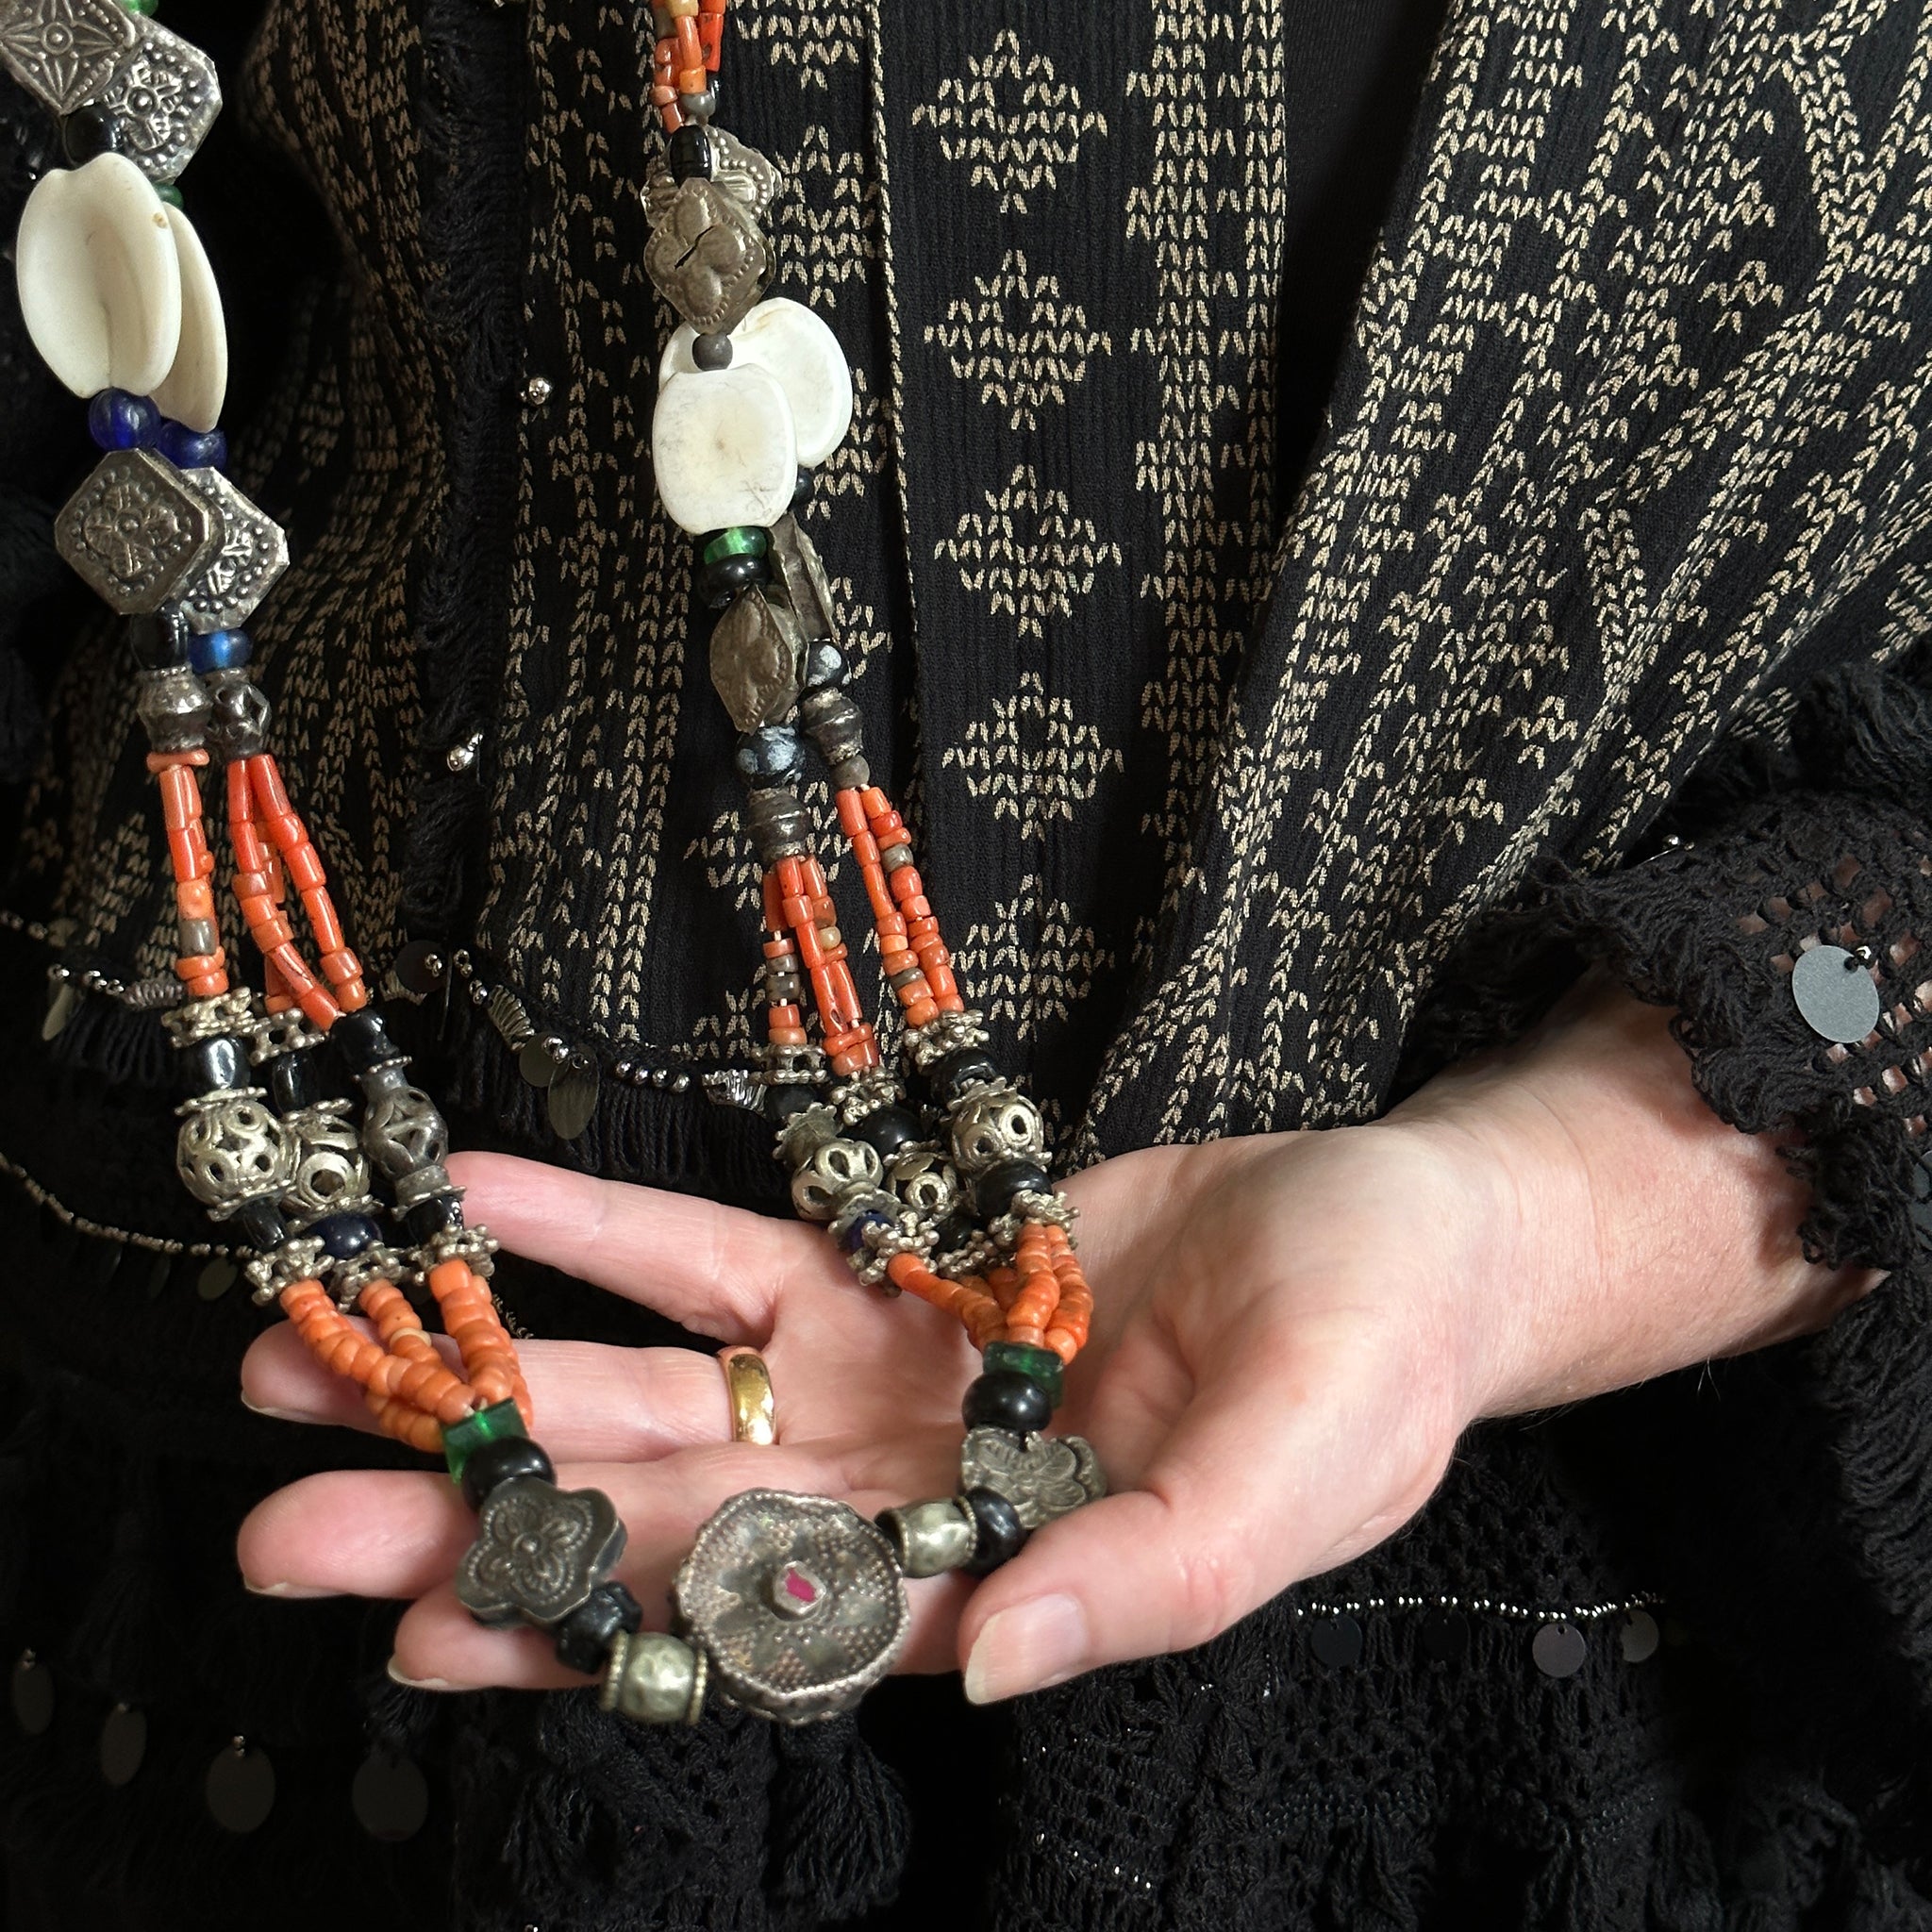 Old Tajik Wedding Necklace – Rare